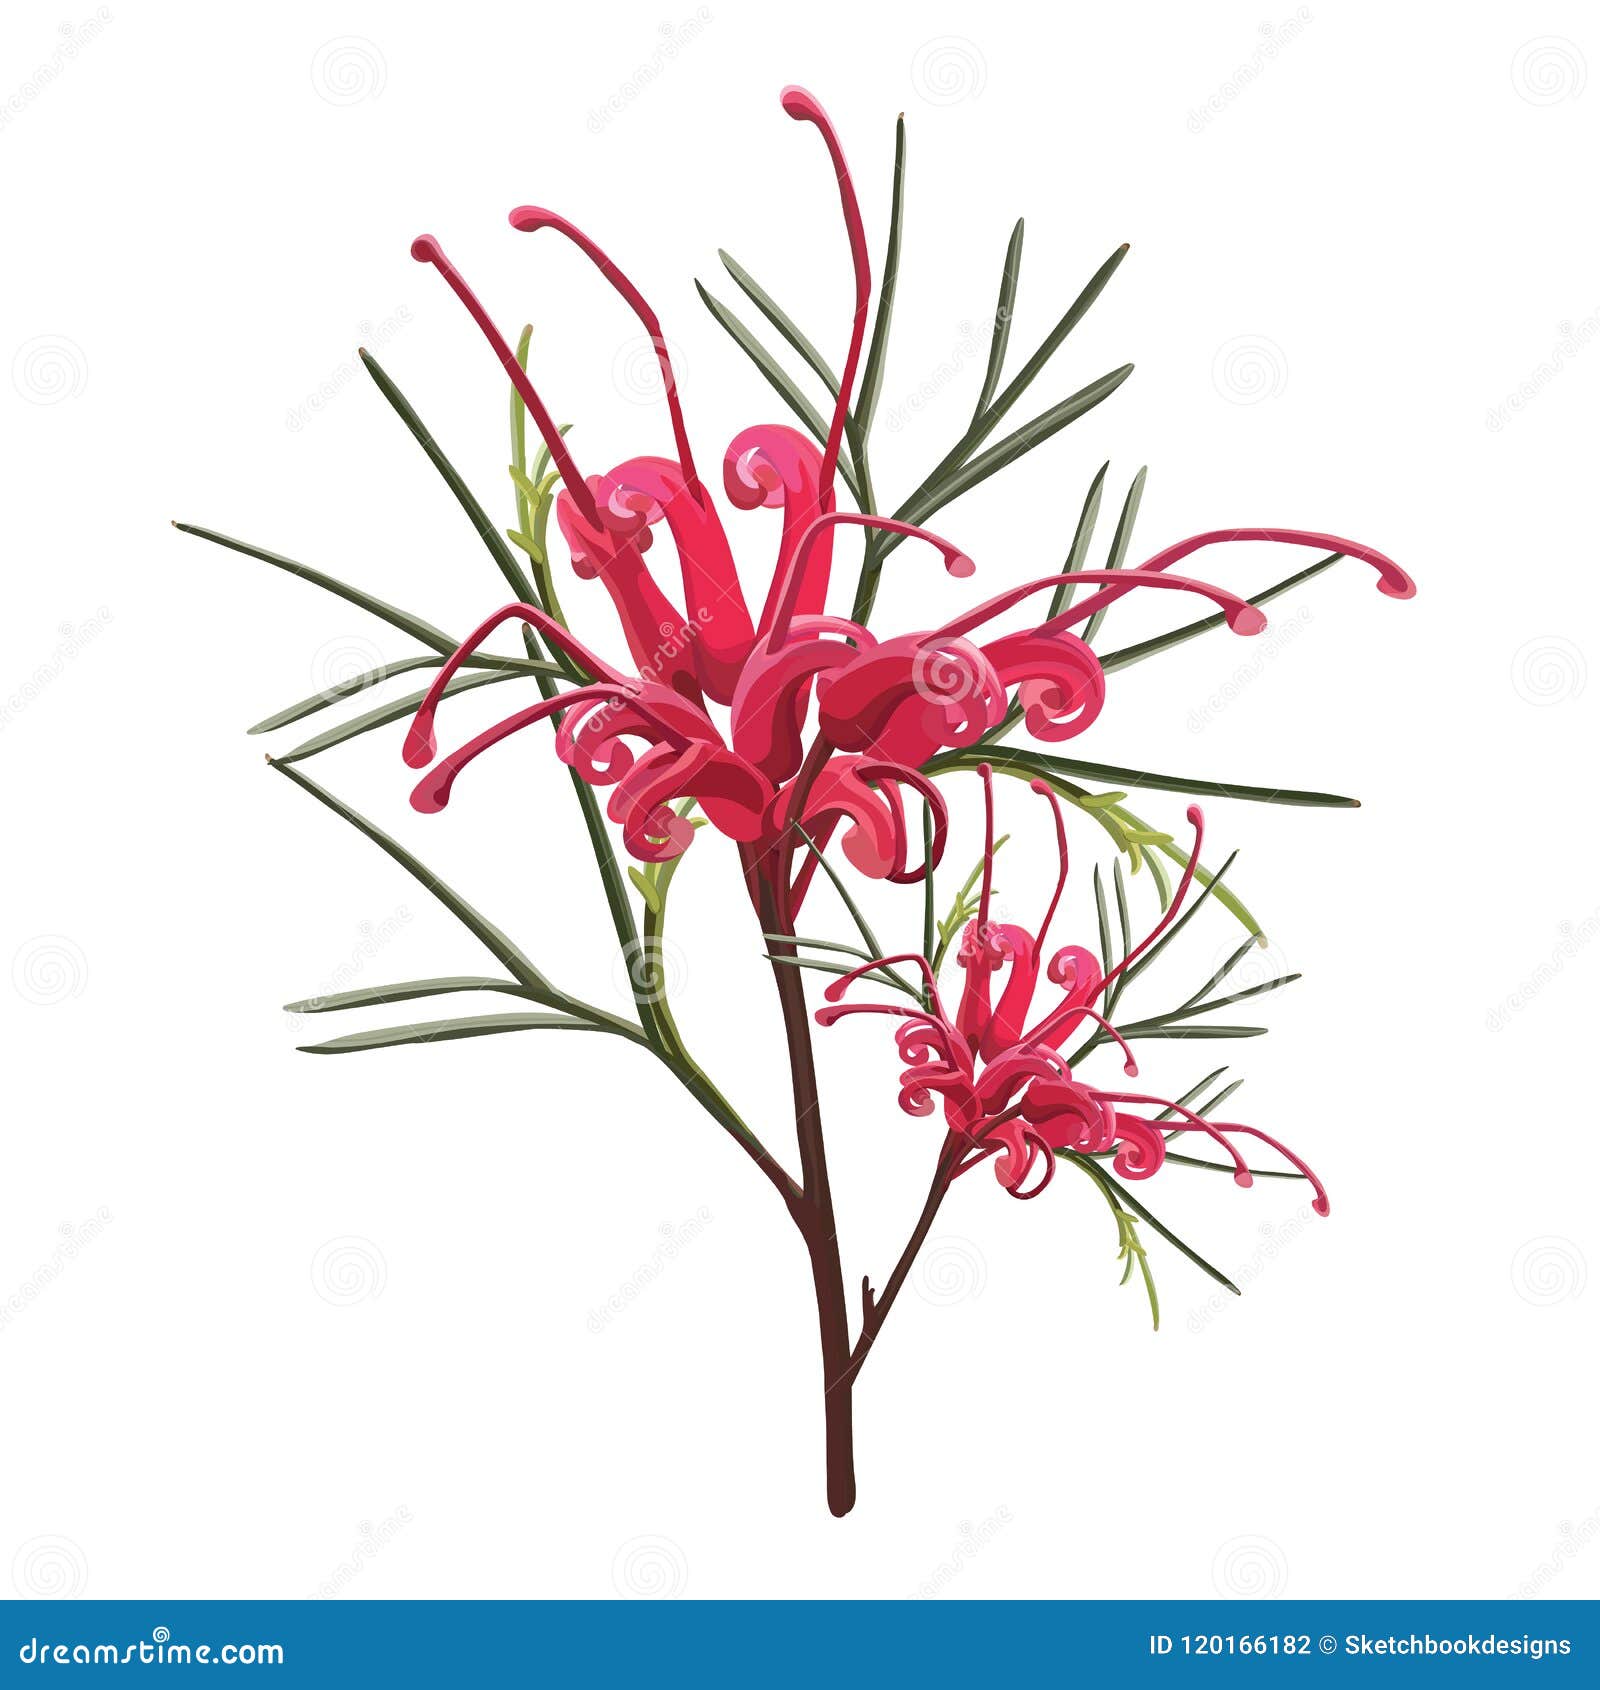 australian native red grevillea flower